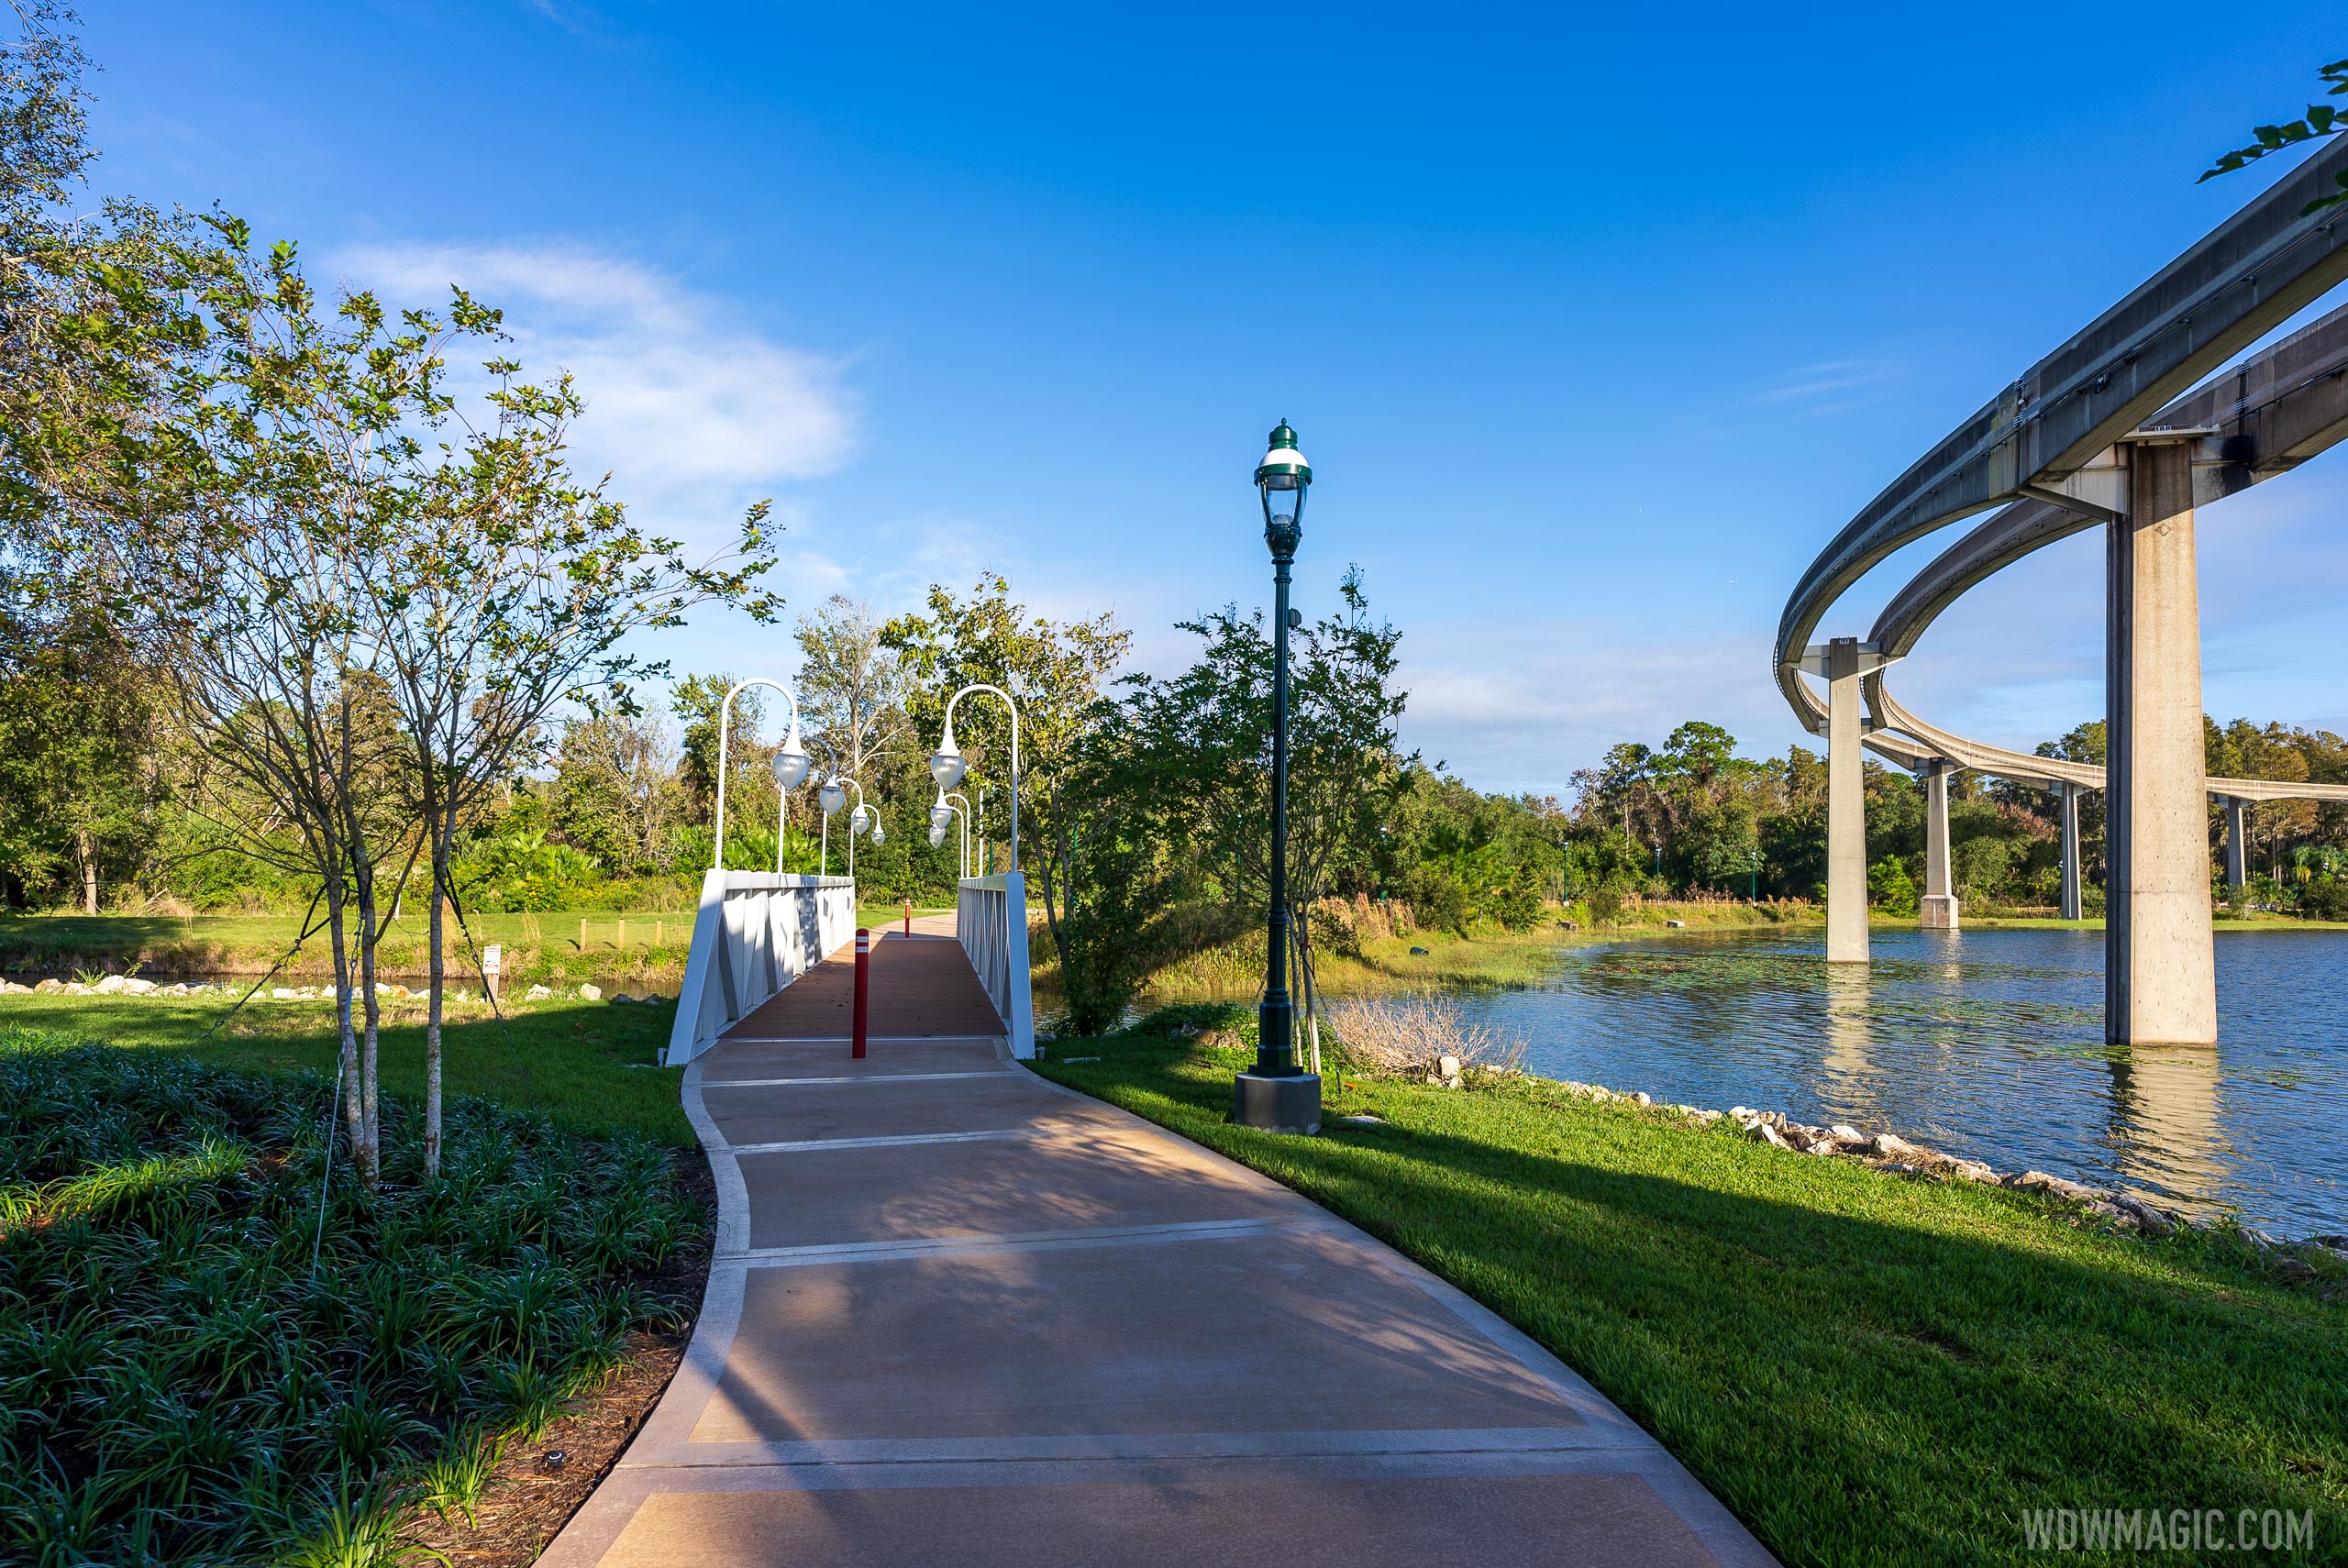 Walkthrough of completed Grand Floridan Resort walkway to Magic Kingdom